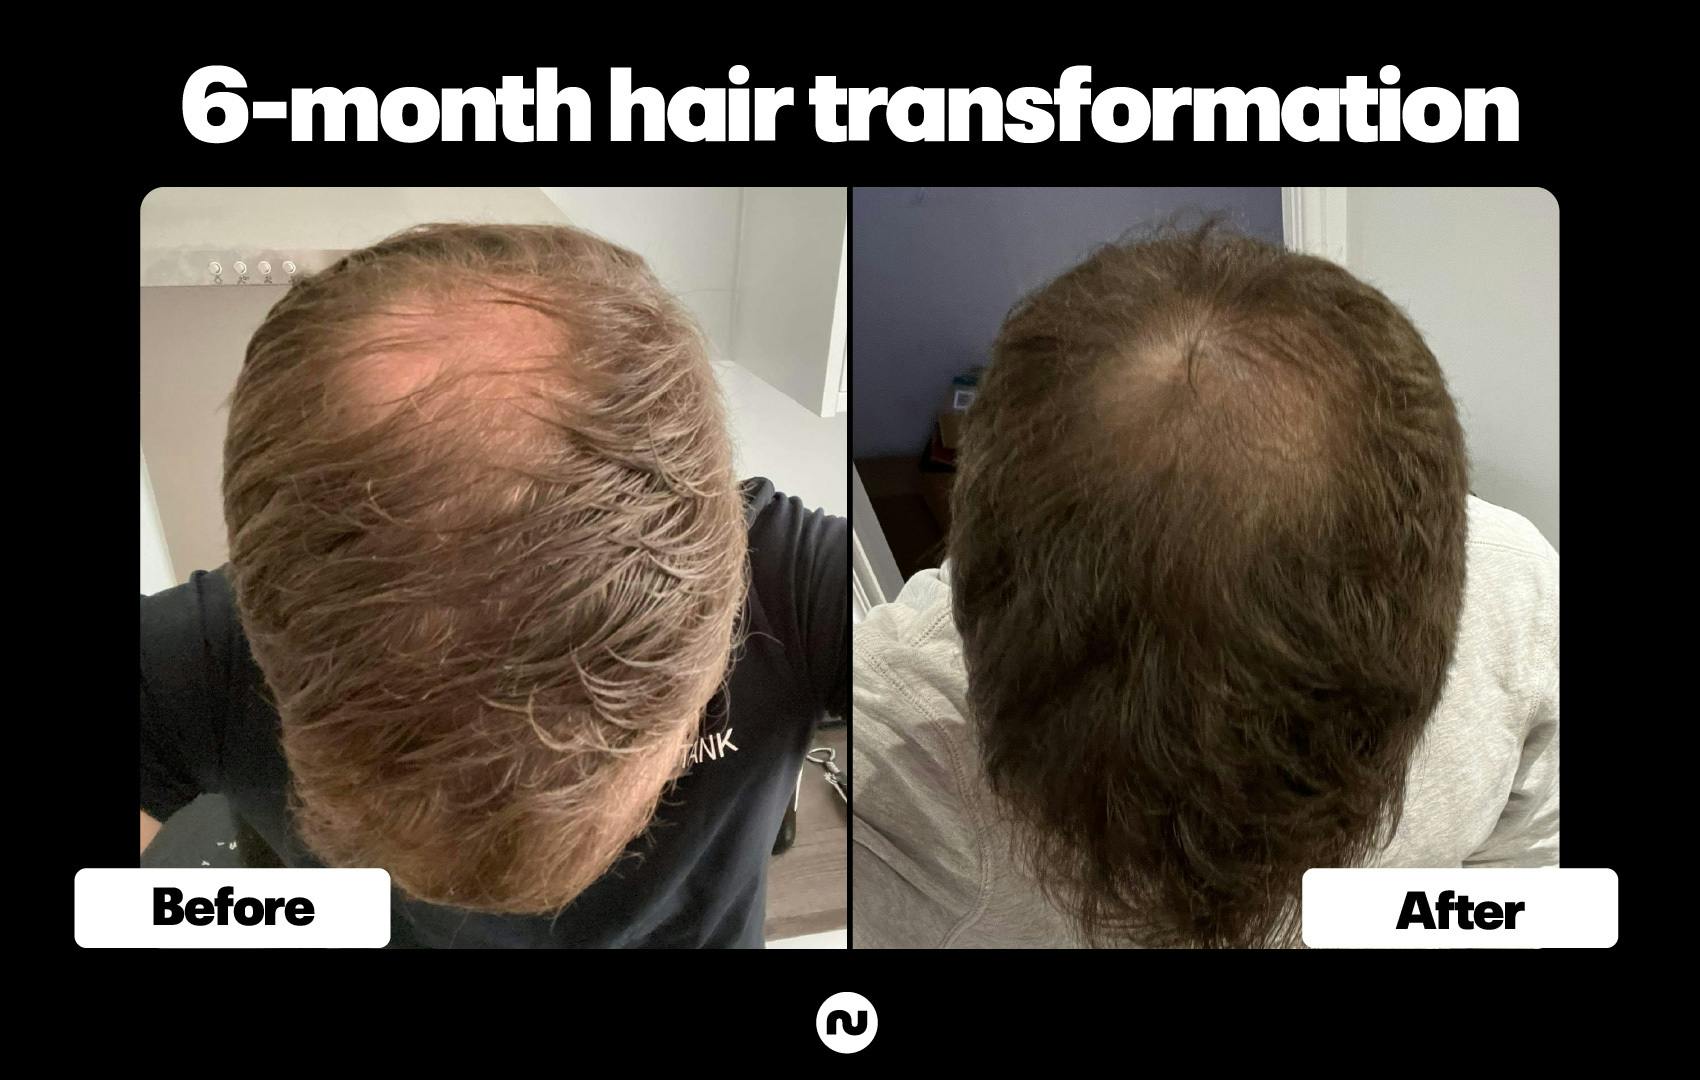 Numankind | Ben's 6-month hair regrowth story